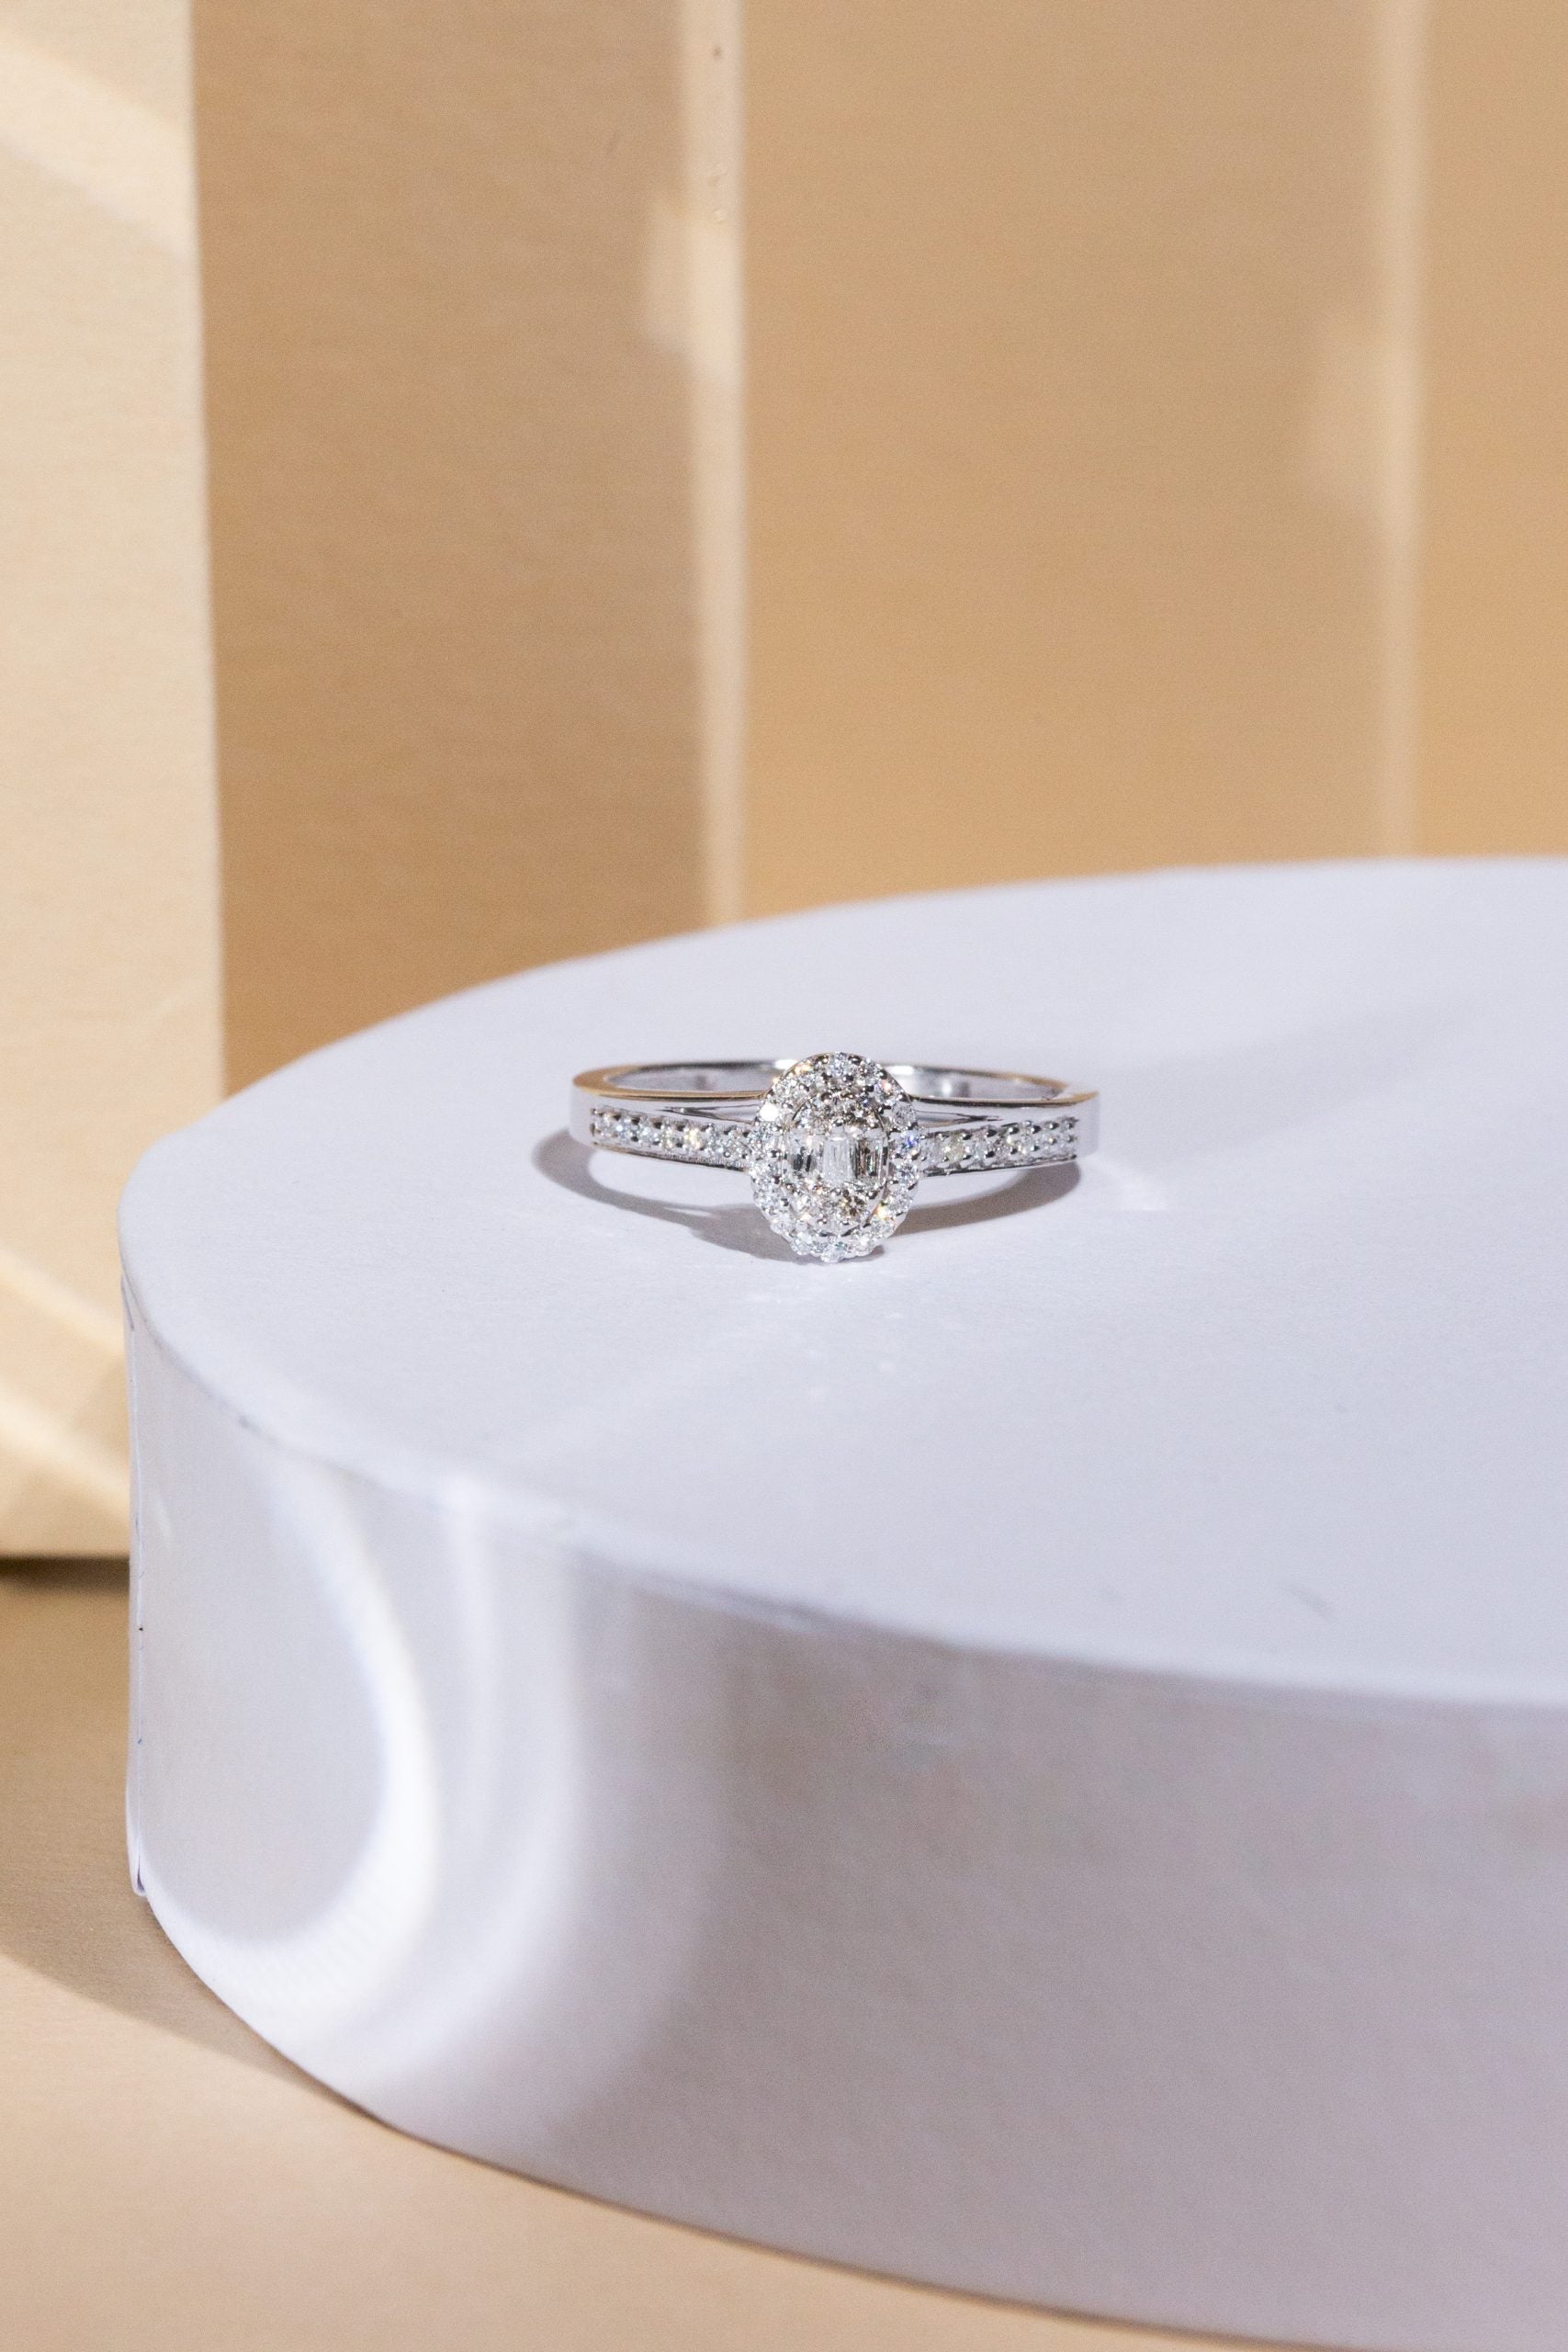 9ct White Gold Ladies Diamond  Engagement Ring - 1102278